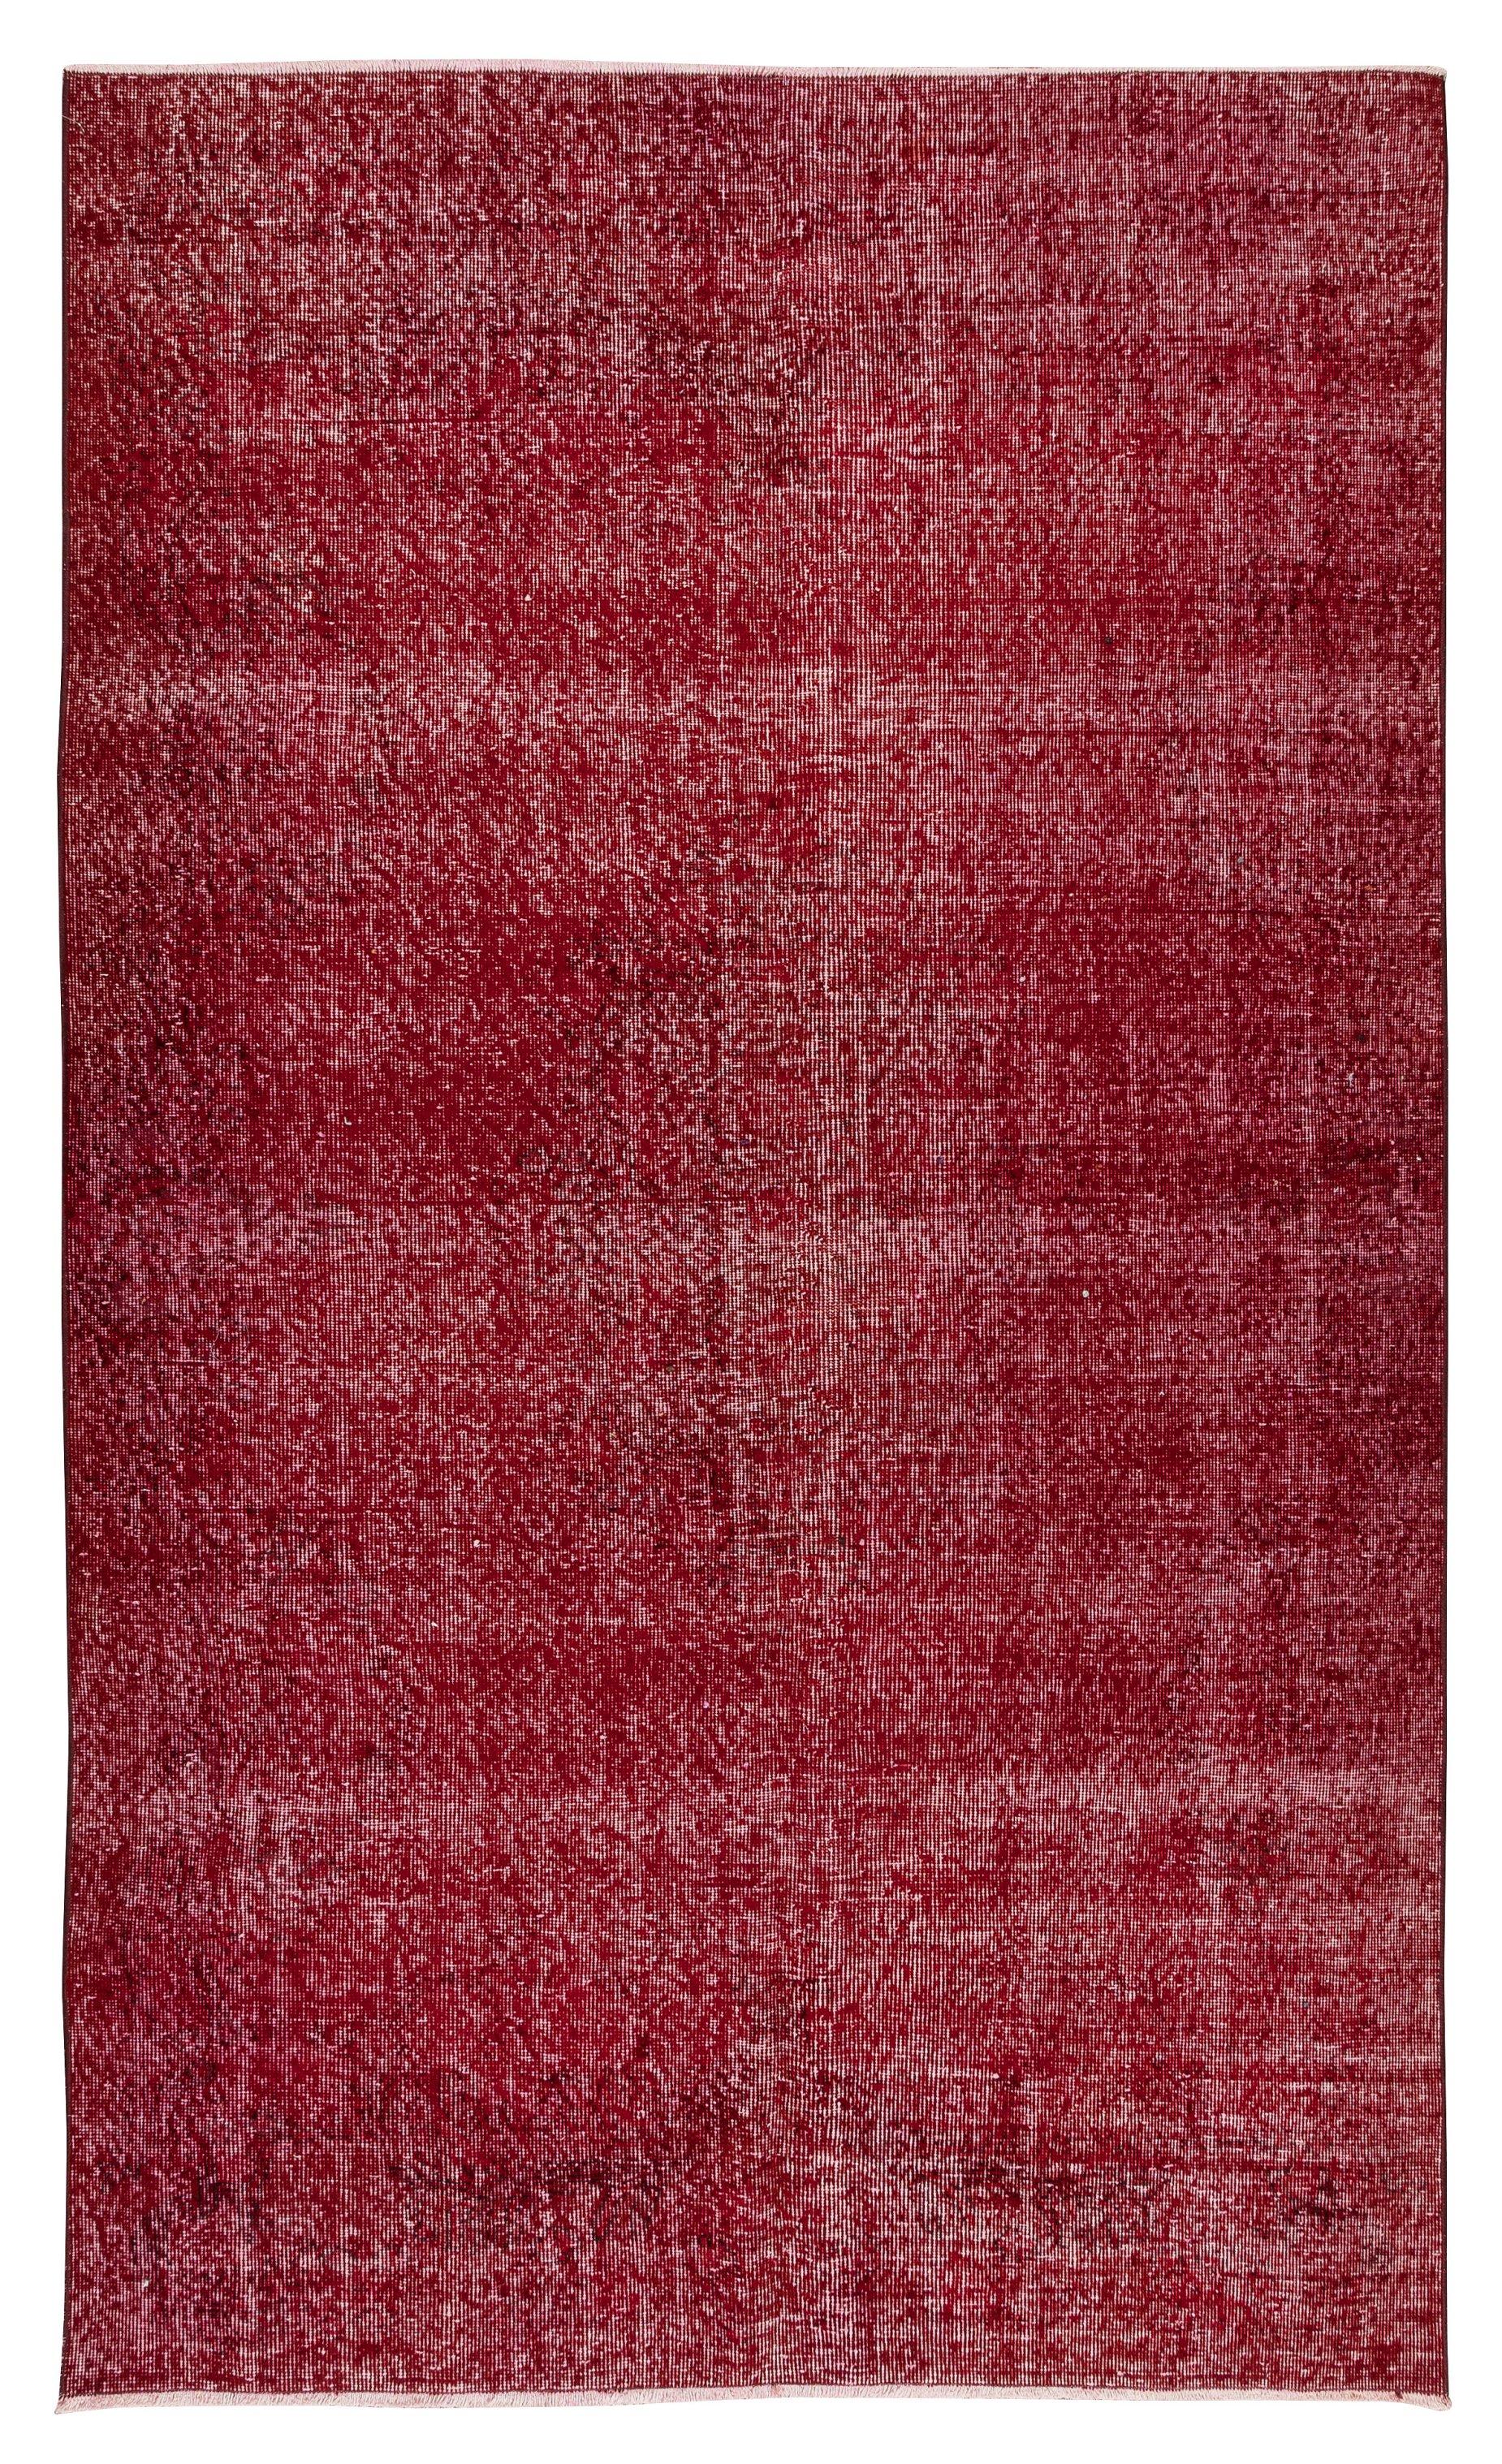 5.3x9 Ft Handmade Turkish Area Rug, Modern Plain Solid Red Wool Carpet